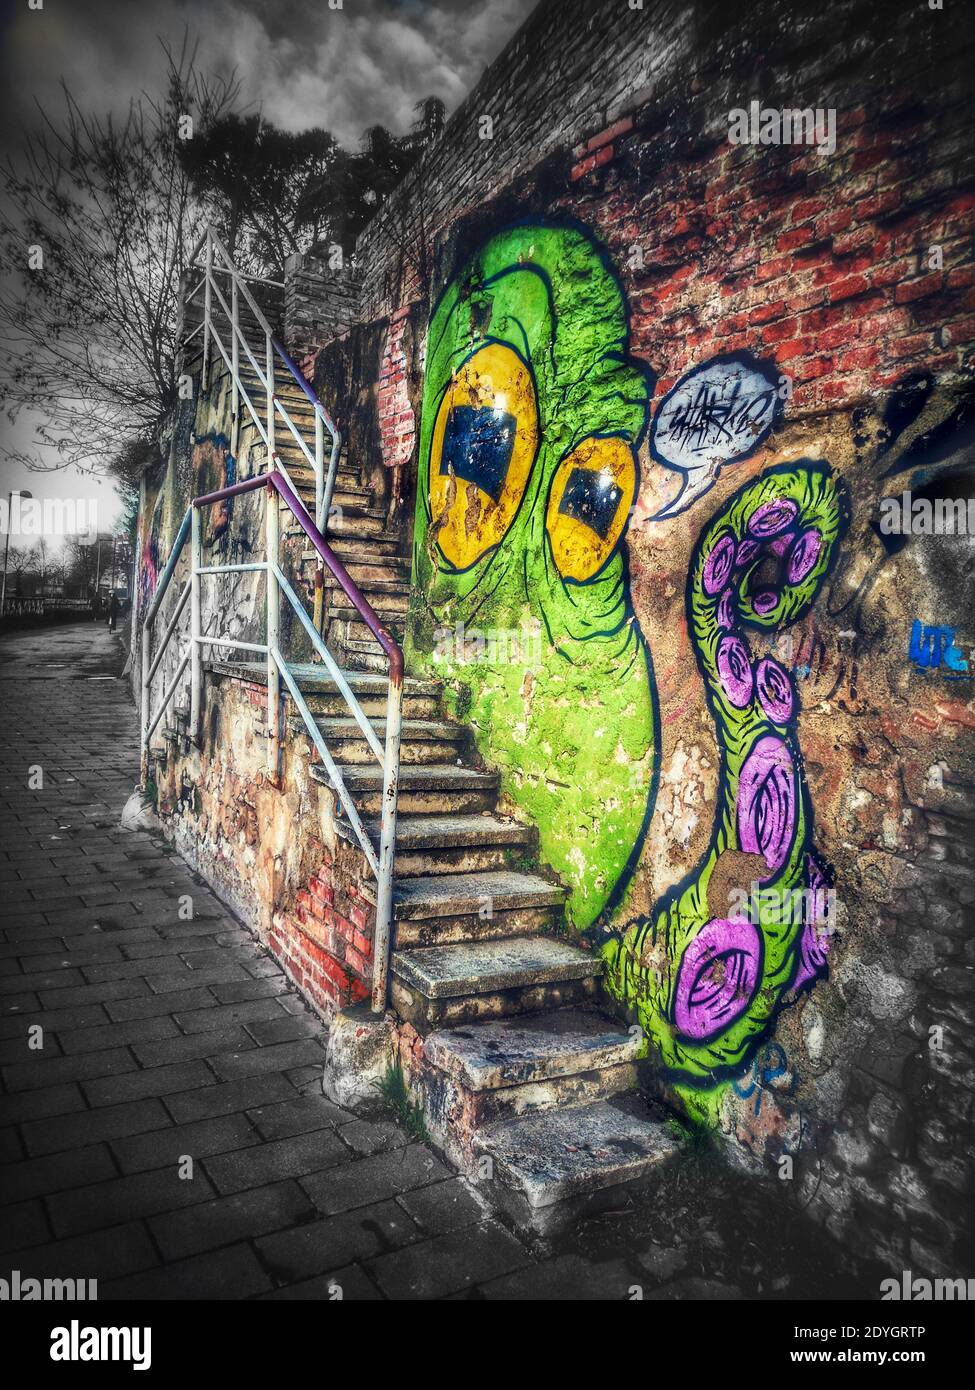 Octopus graffiti art near a city street stair Stock Photo